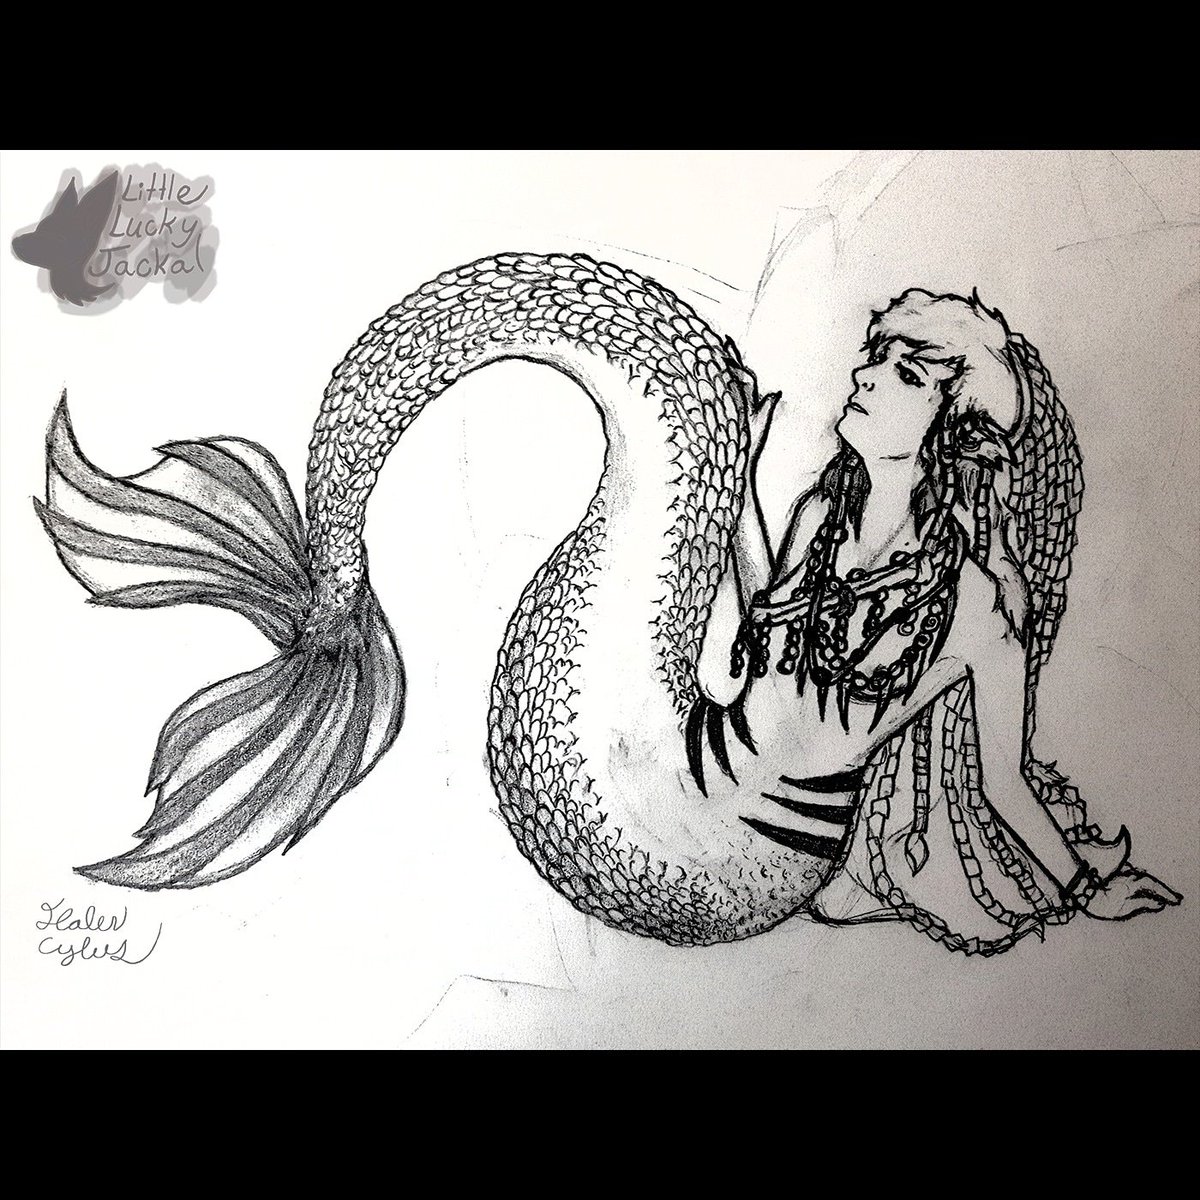 Mermaids will always be fun to draw~

Medium- pencil

#sketch #mermaid #freshwatermermaid #jewelryaesthetic